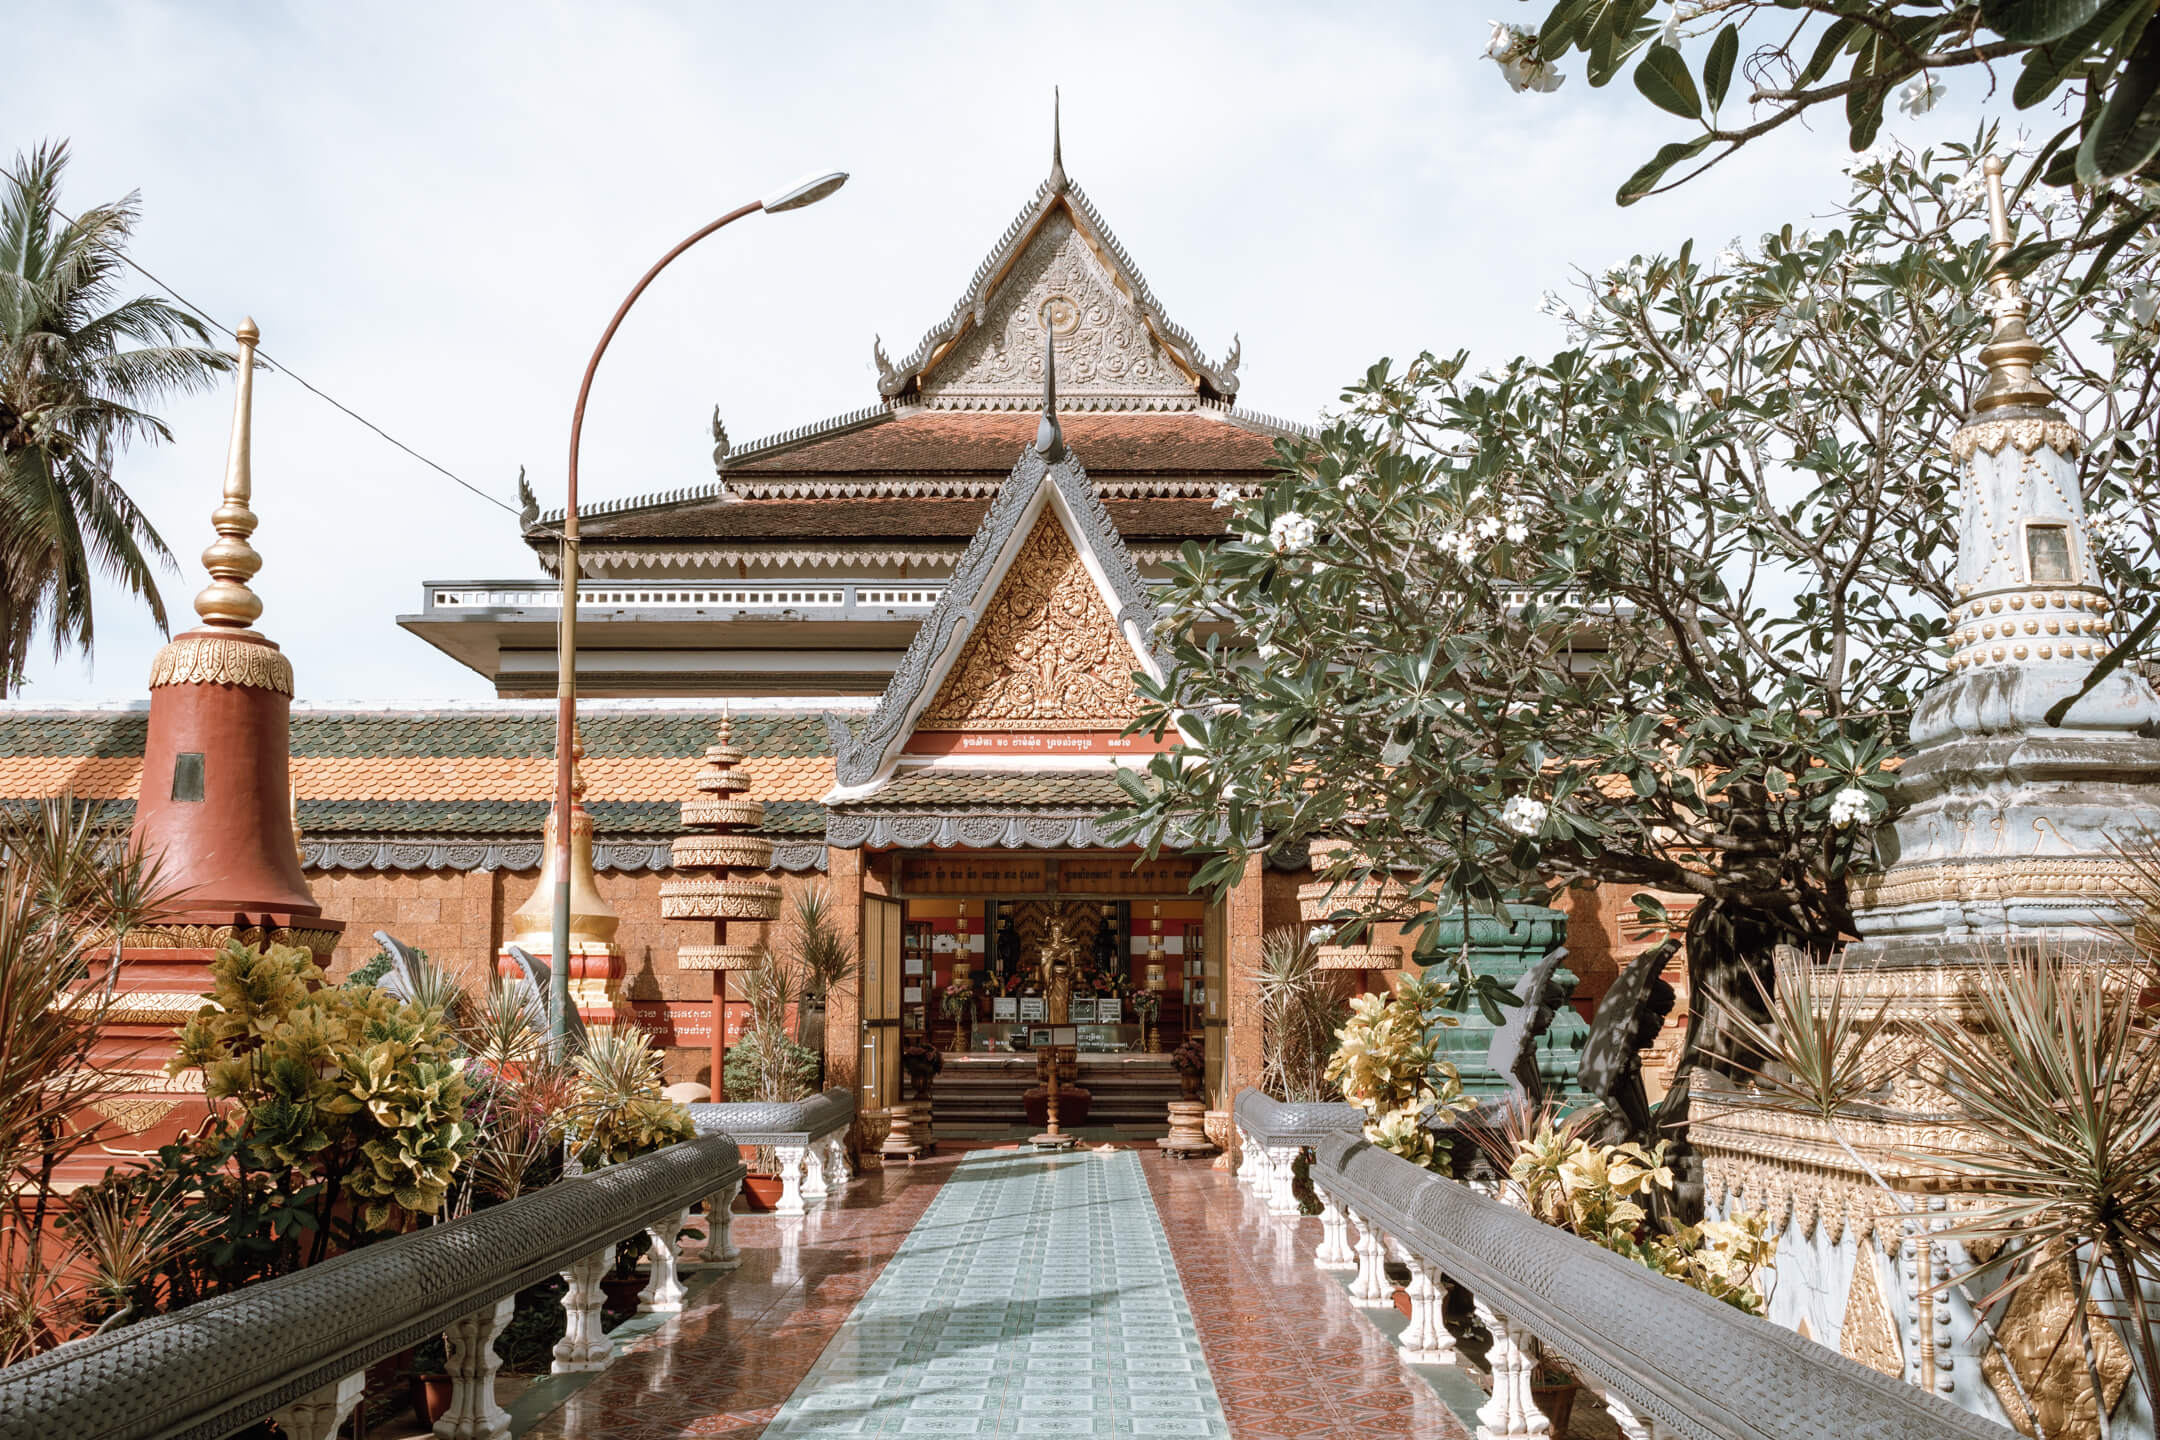 The Best Photogenic Spots In Cambodia